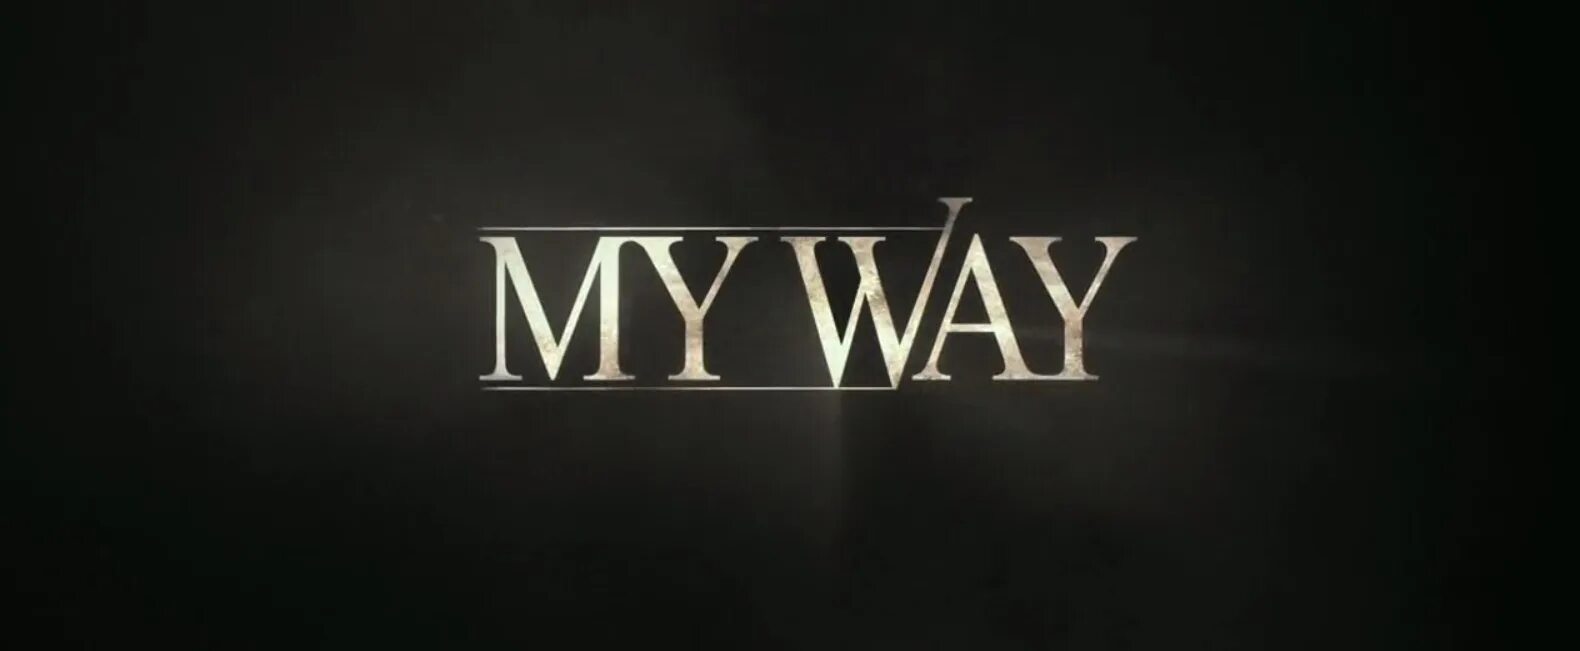 My way описание. My way. My way logo. El way на обои. My way истории.